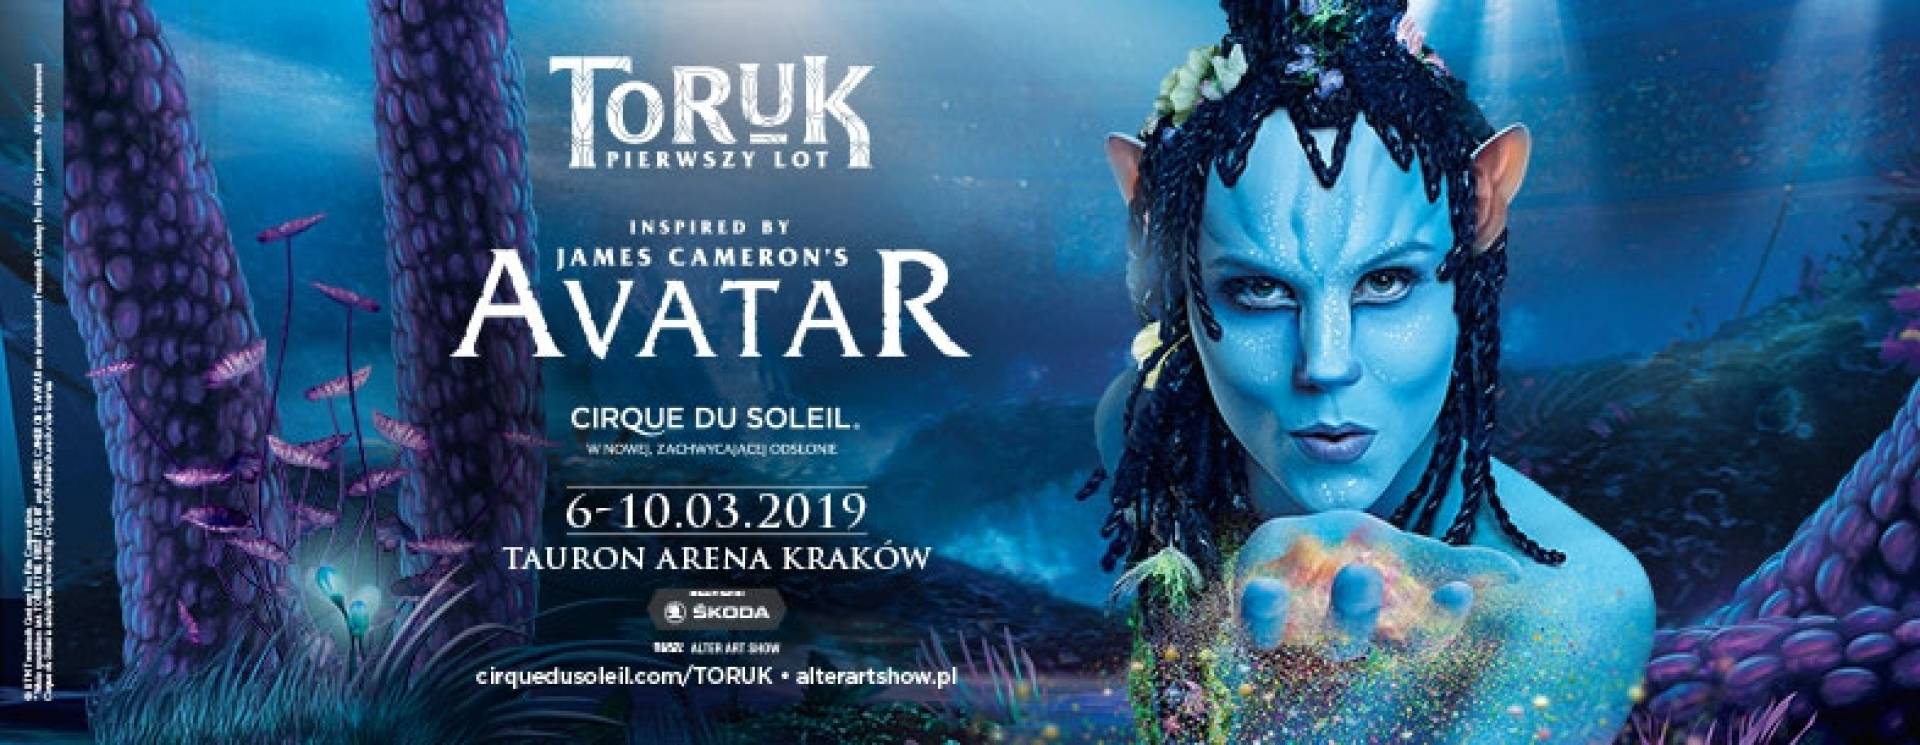 "Toruk - Pierwszy lot" - widowisko Cirque du Soleil